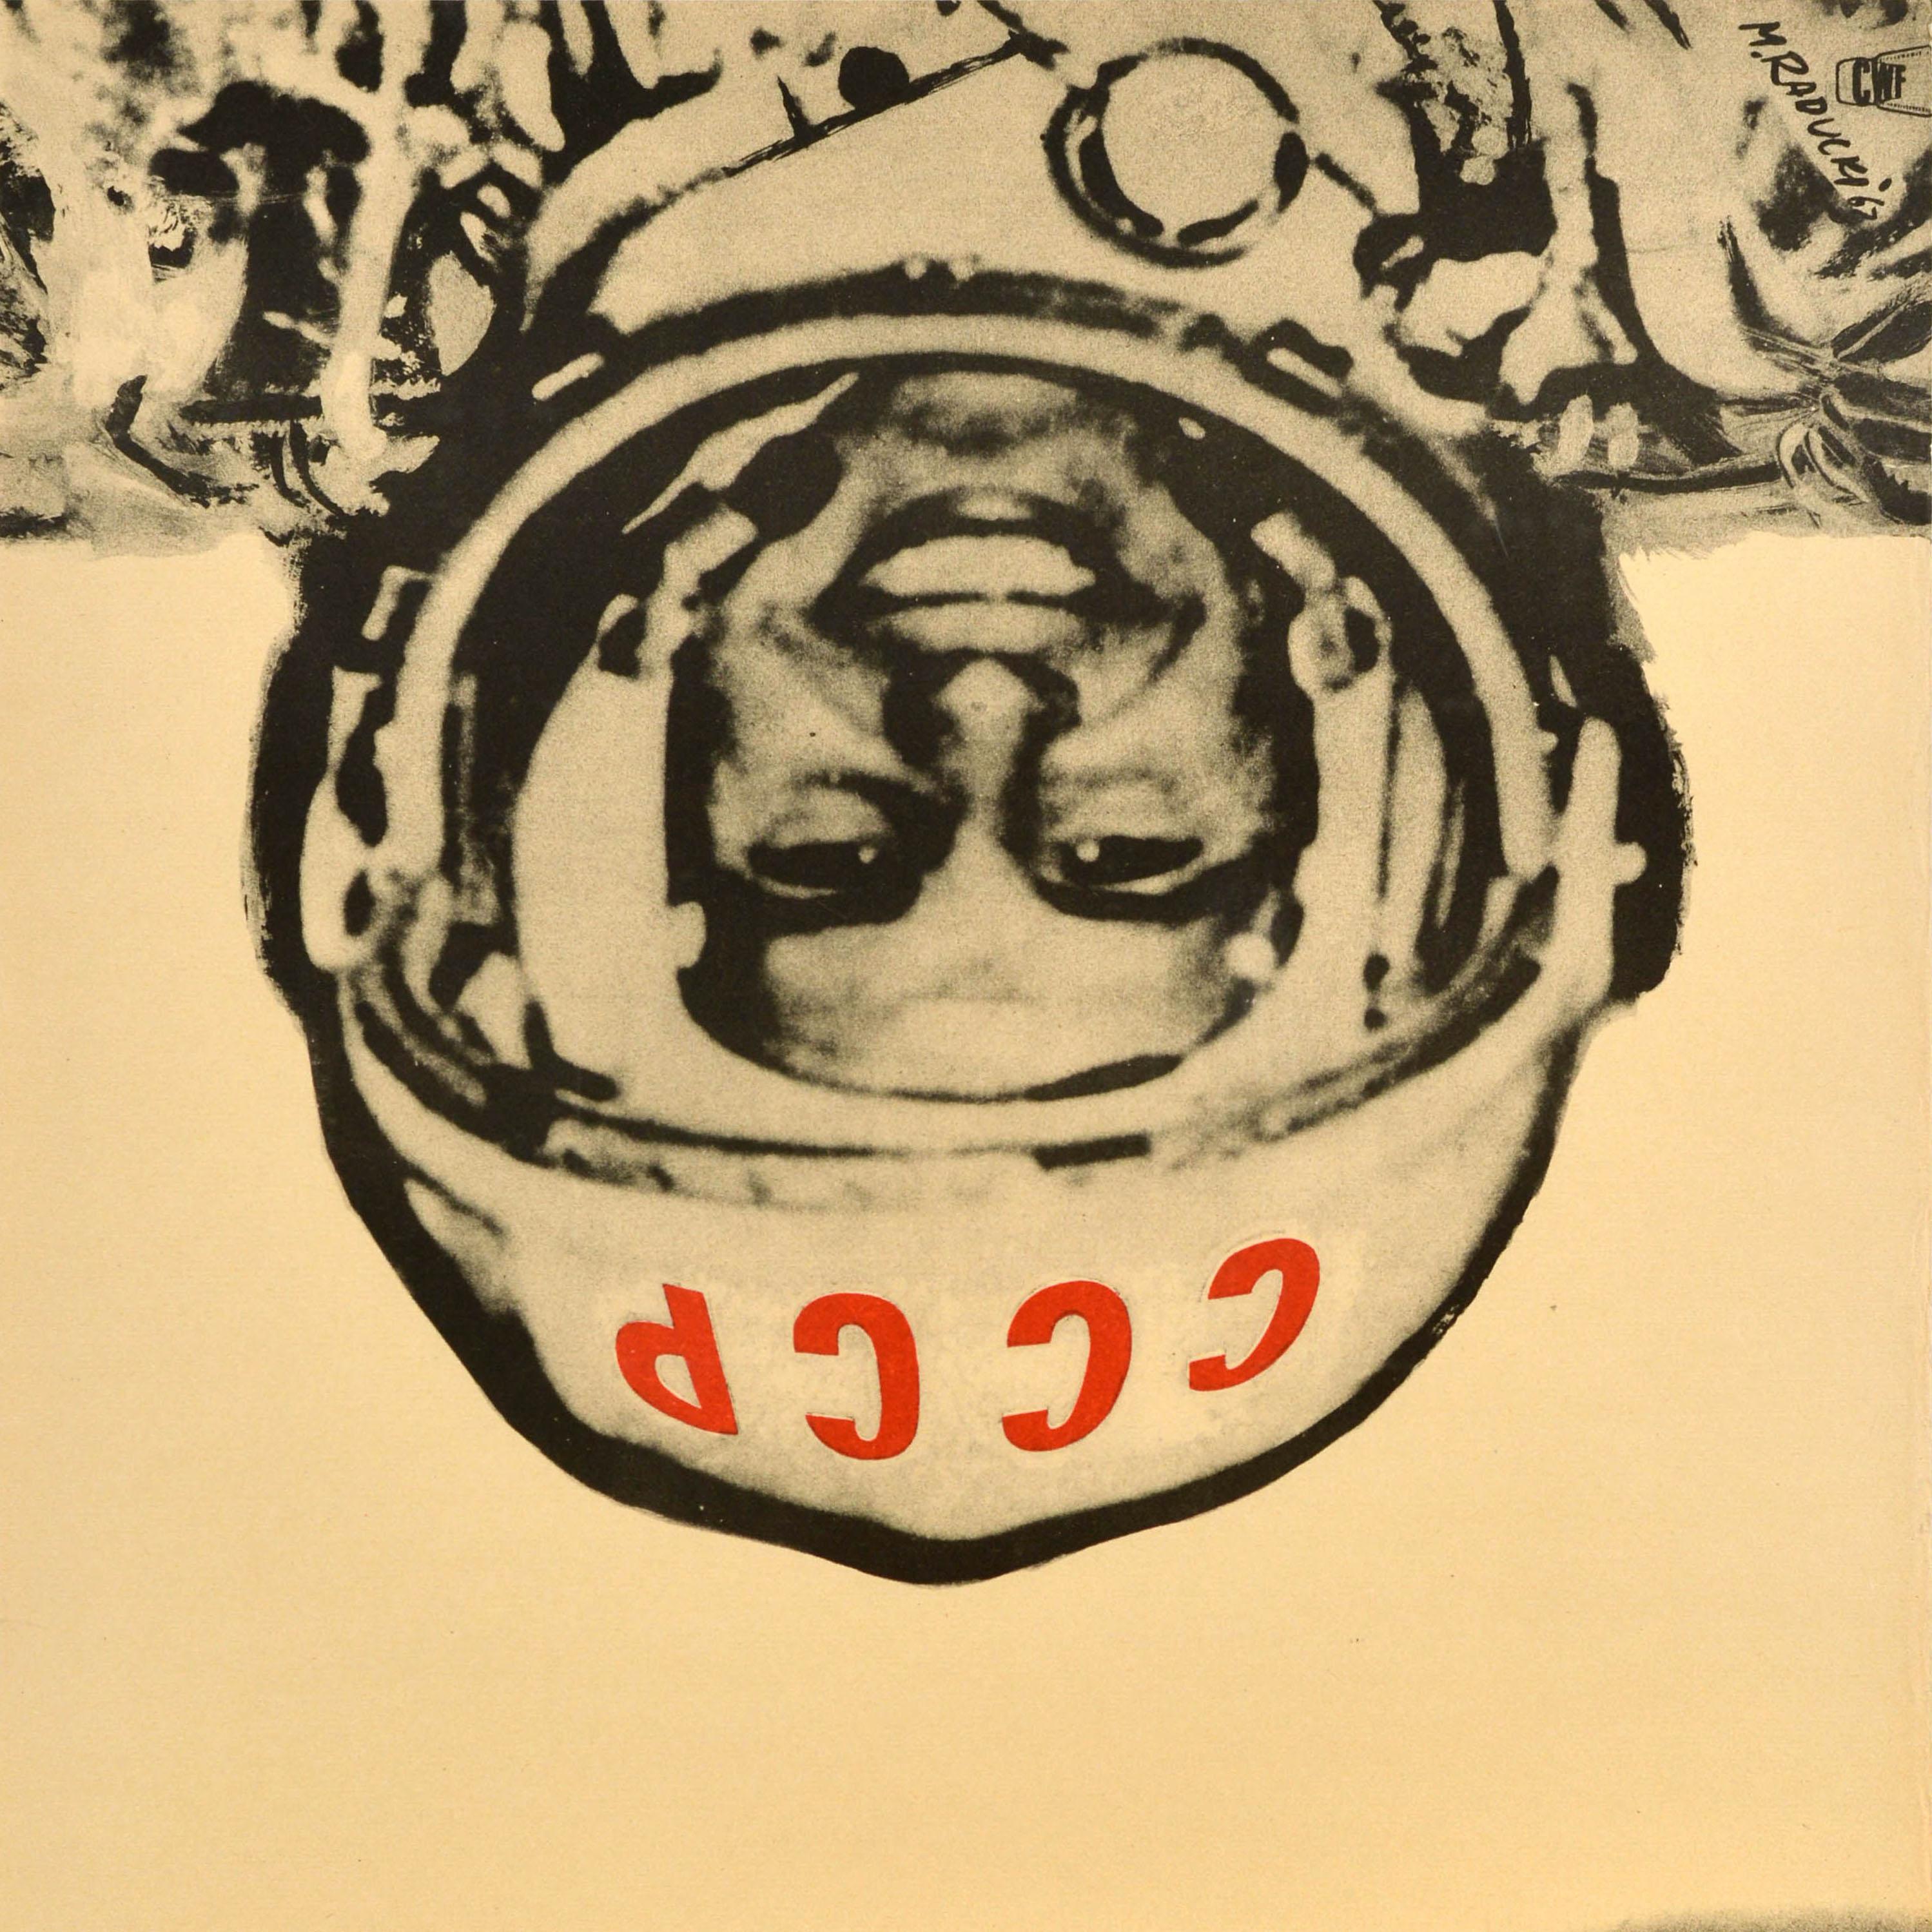 Polish Original Vintage Movie Poster Jutro Na Orbite USSR Moon Mission Gagarin Space